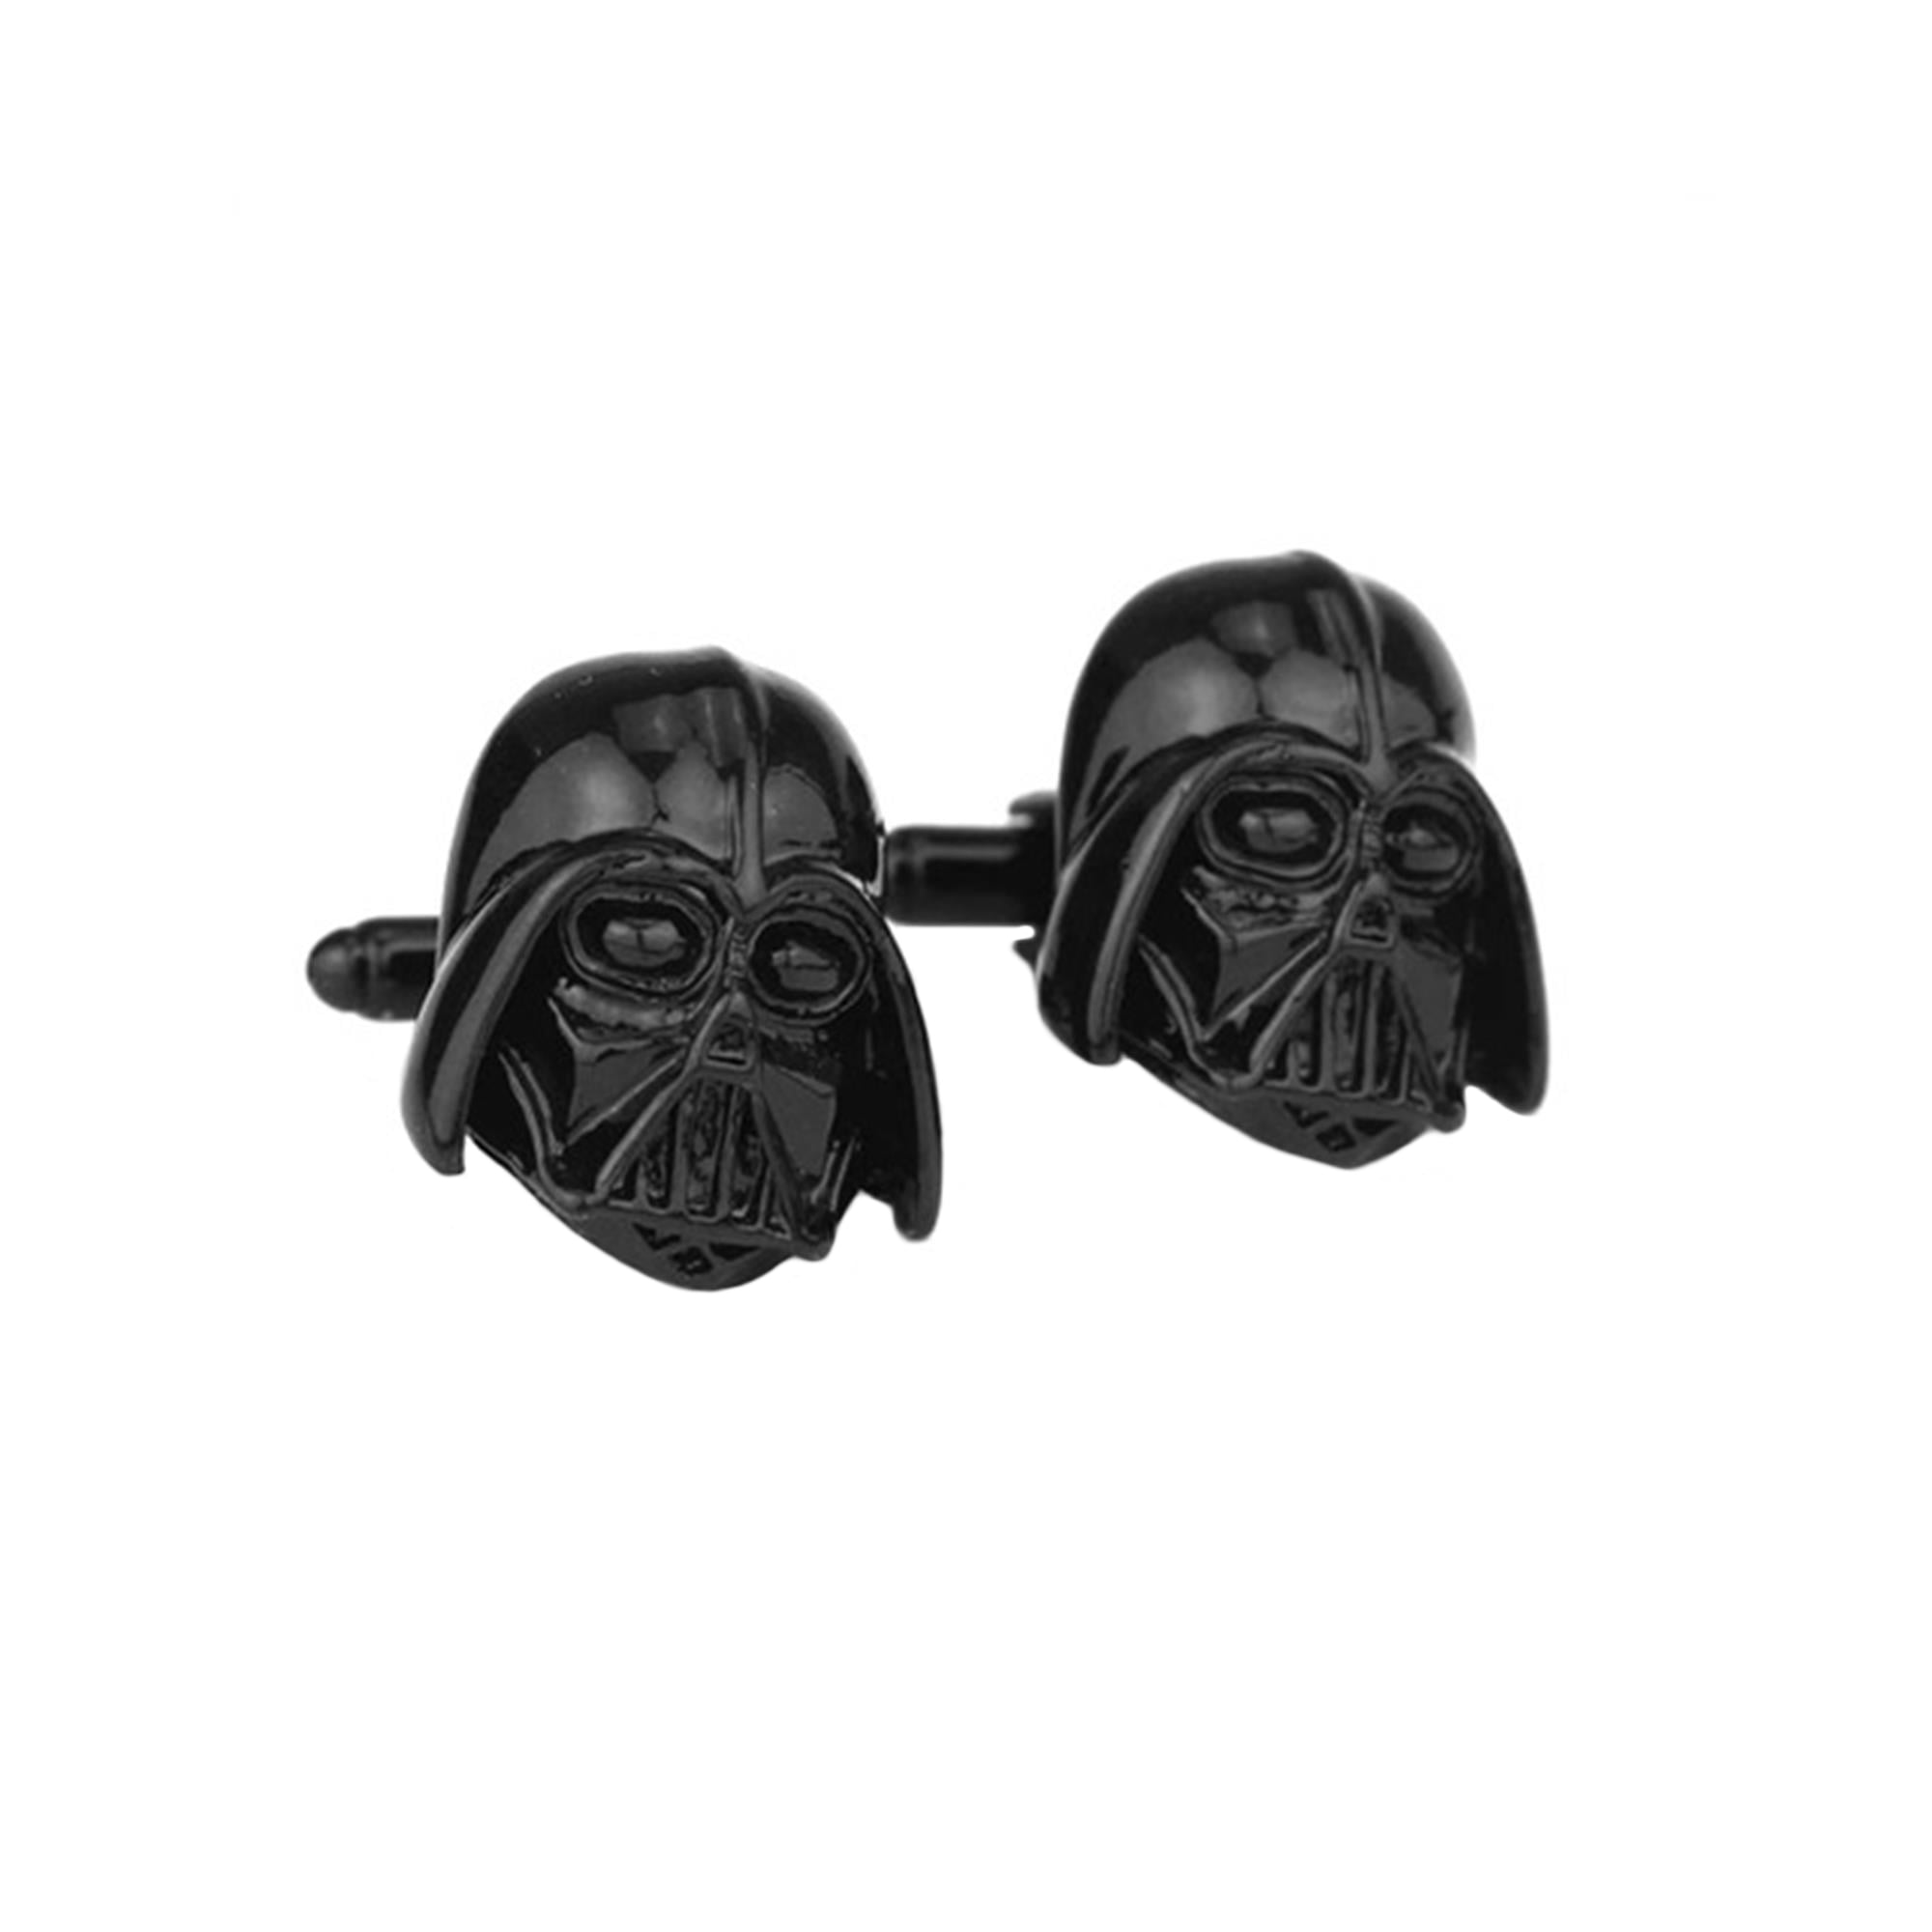 Star Wars Darth Vader Cufflinks Black in Star Wars Gift Box